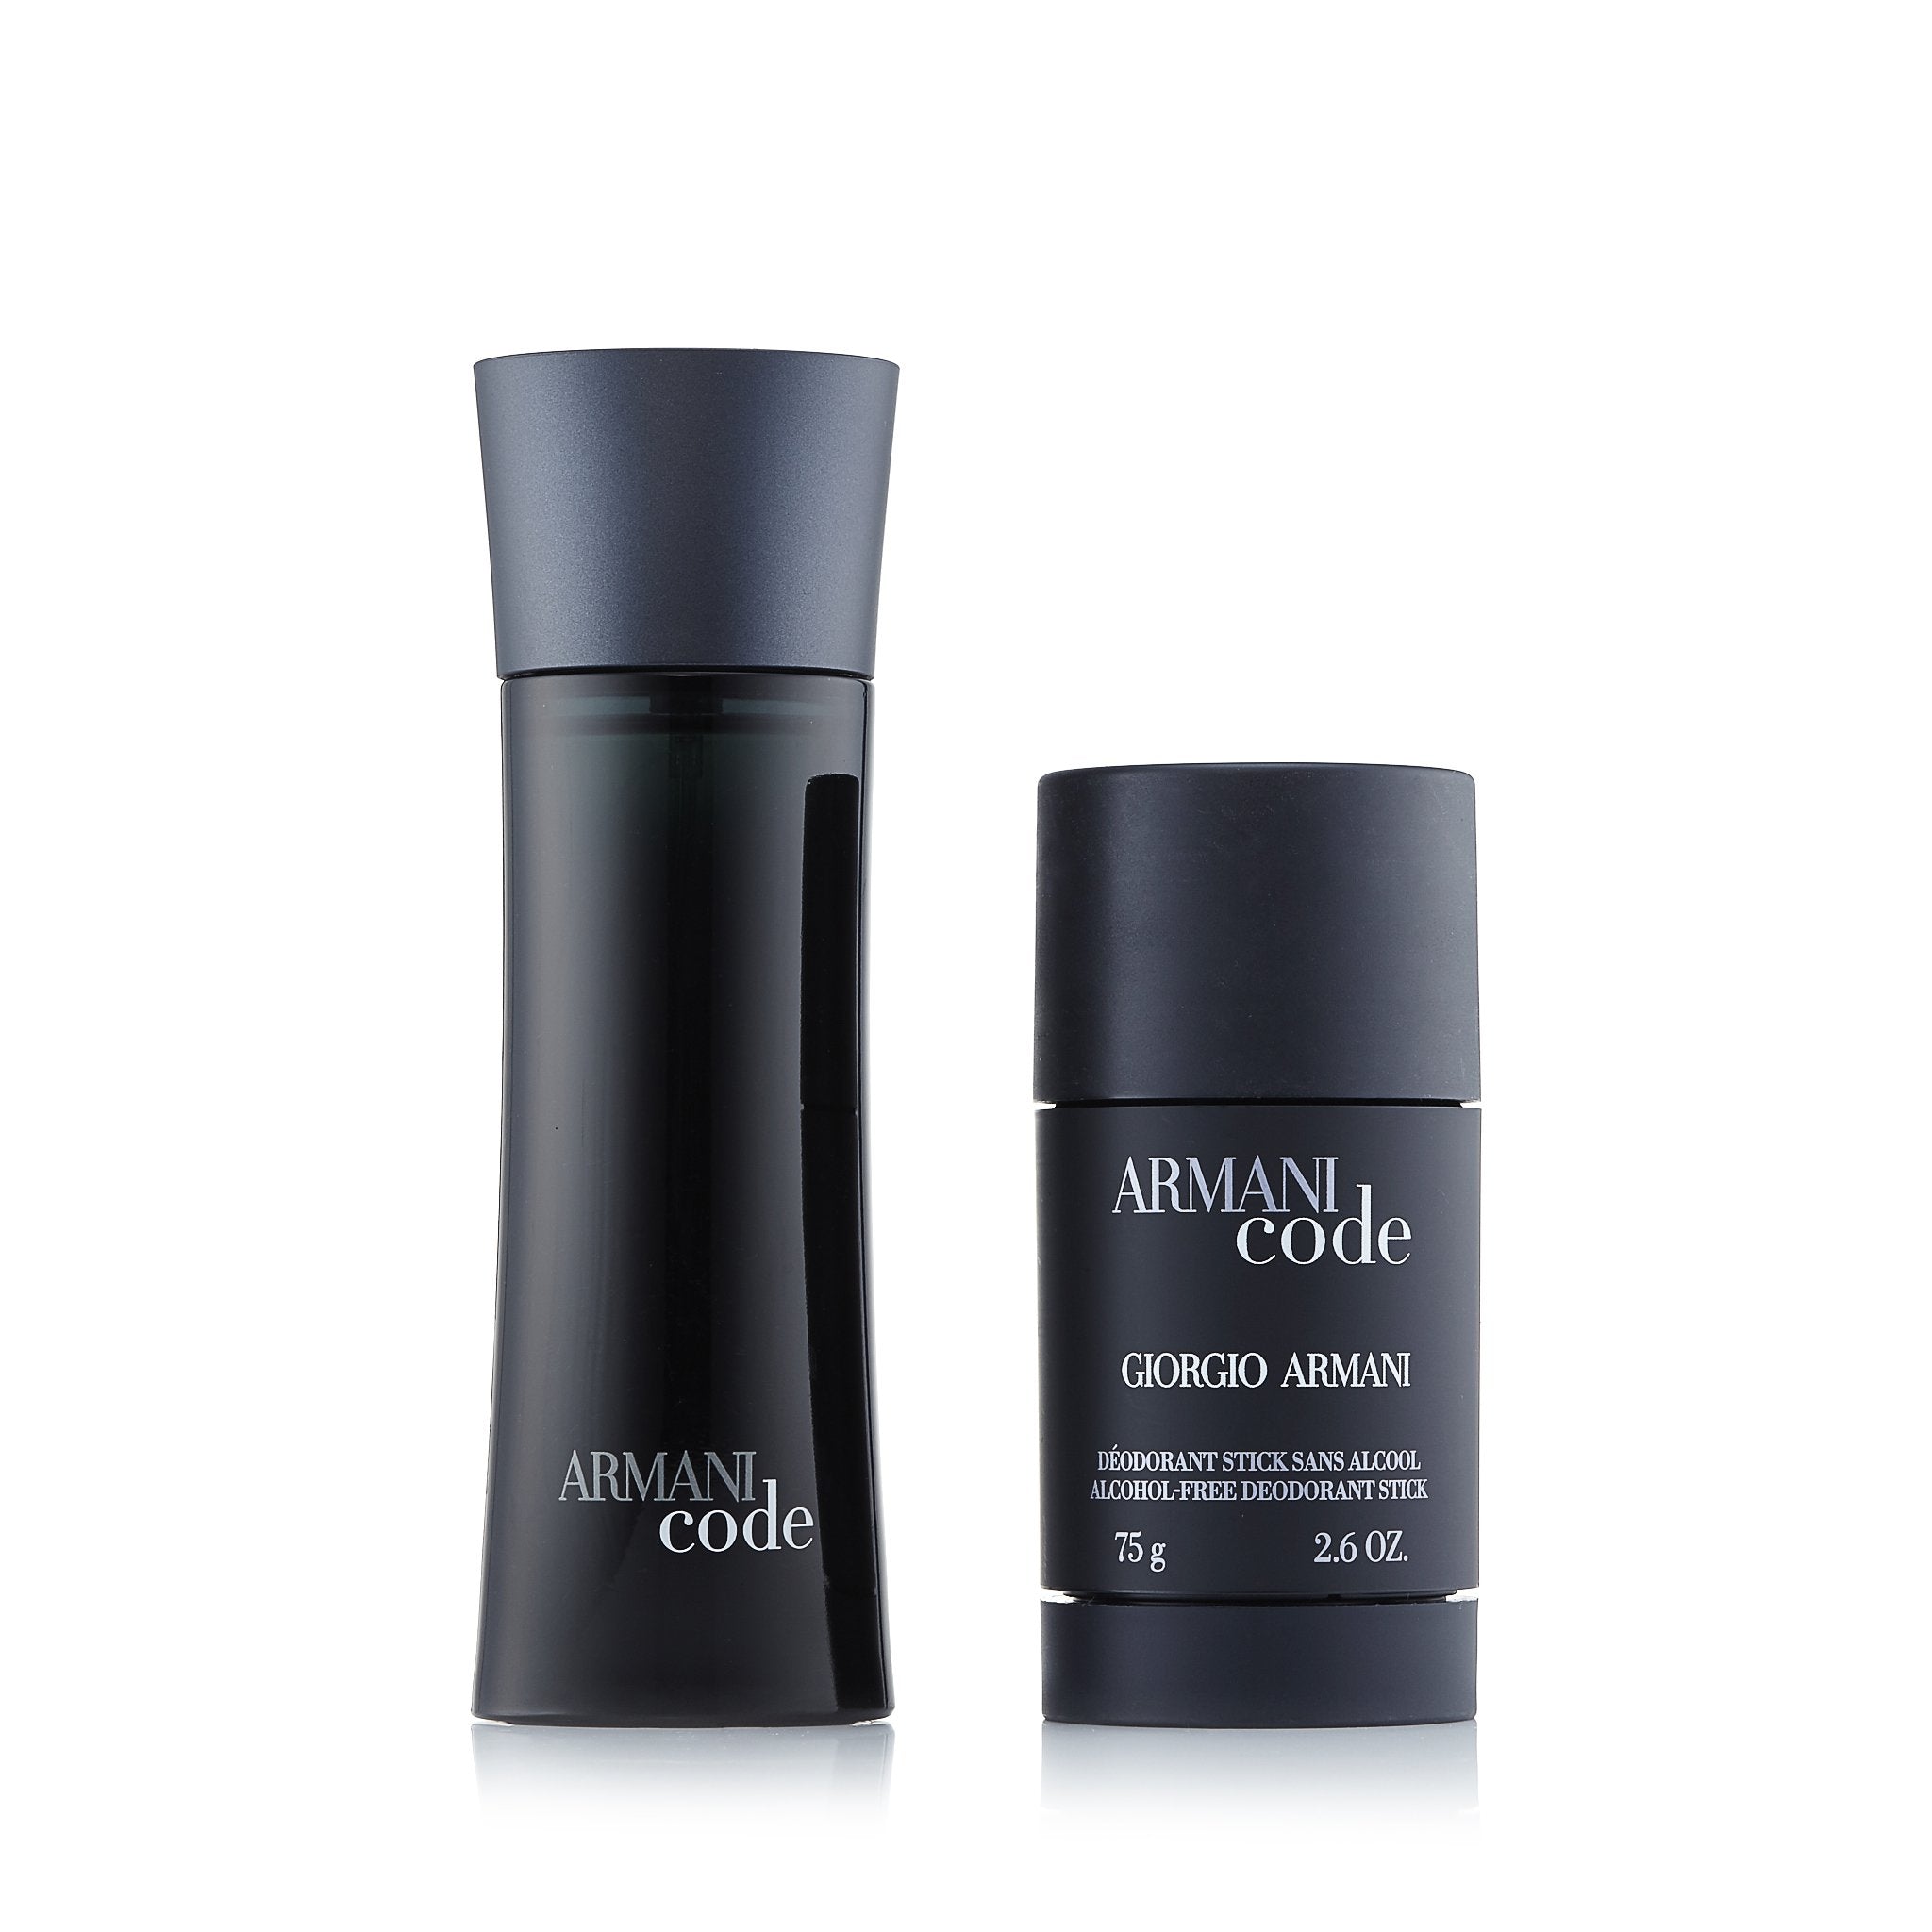 Armani Code Gift Set for Men by Giorgio Armani Fragrance Market